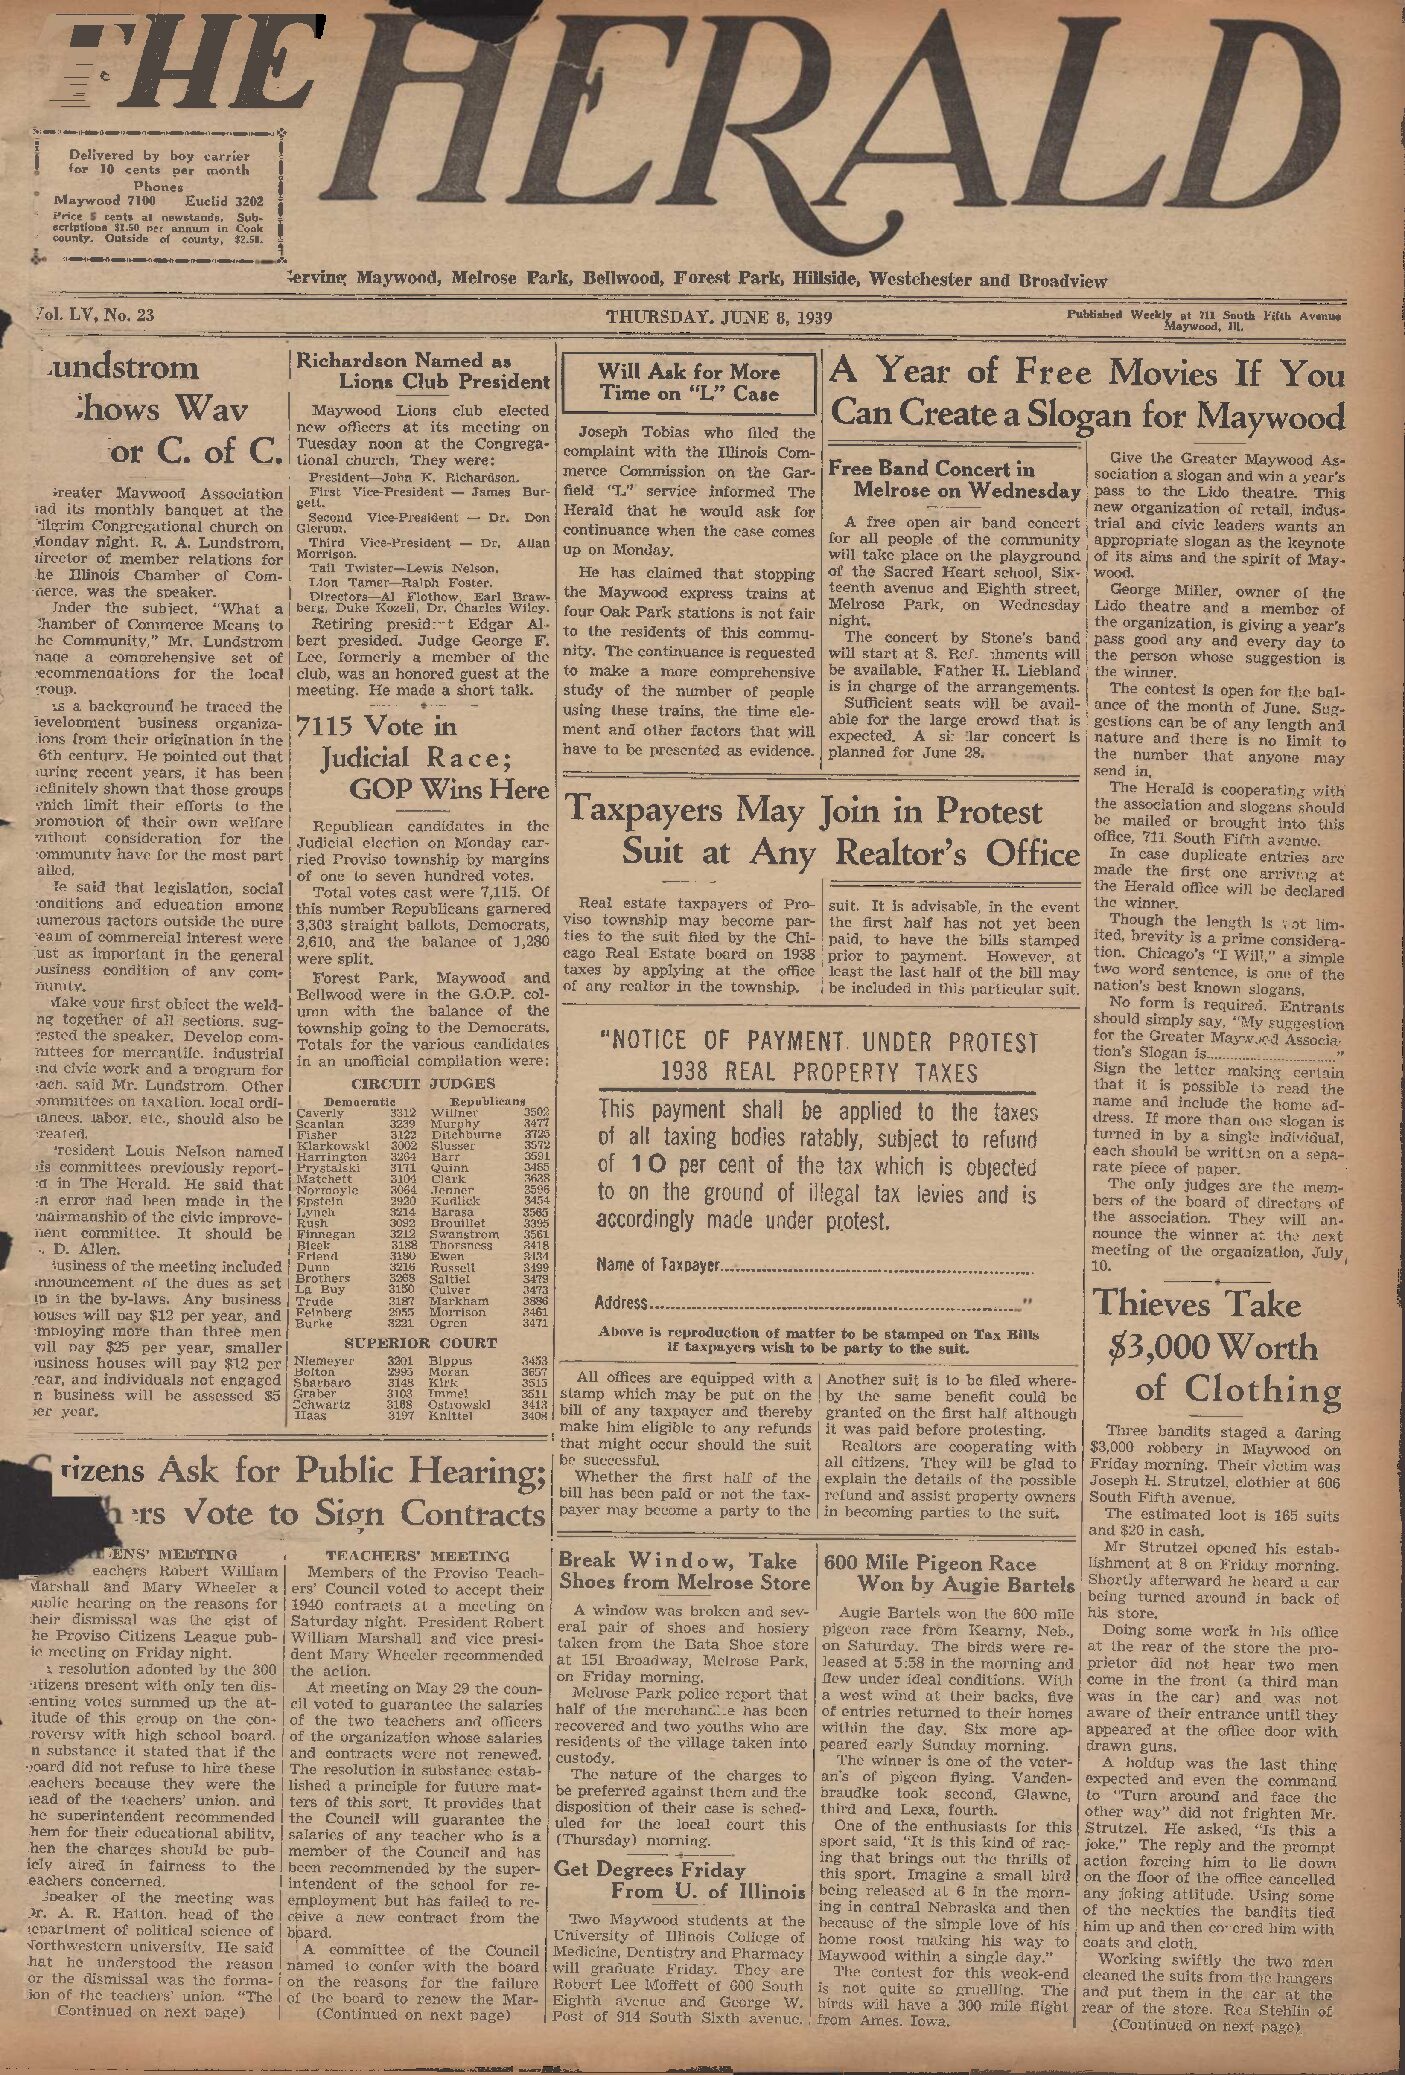 The Herald – 19390608